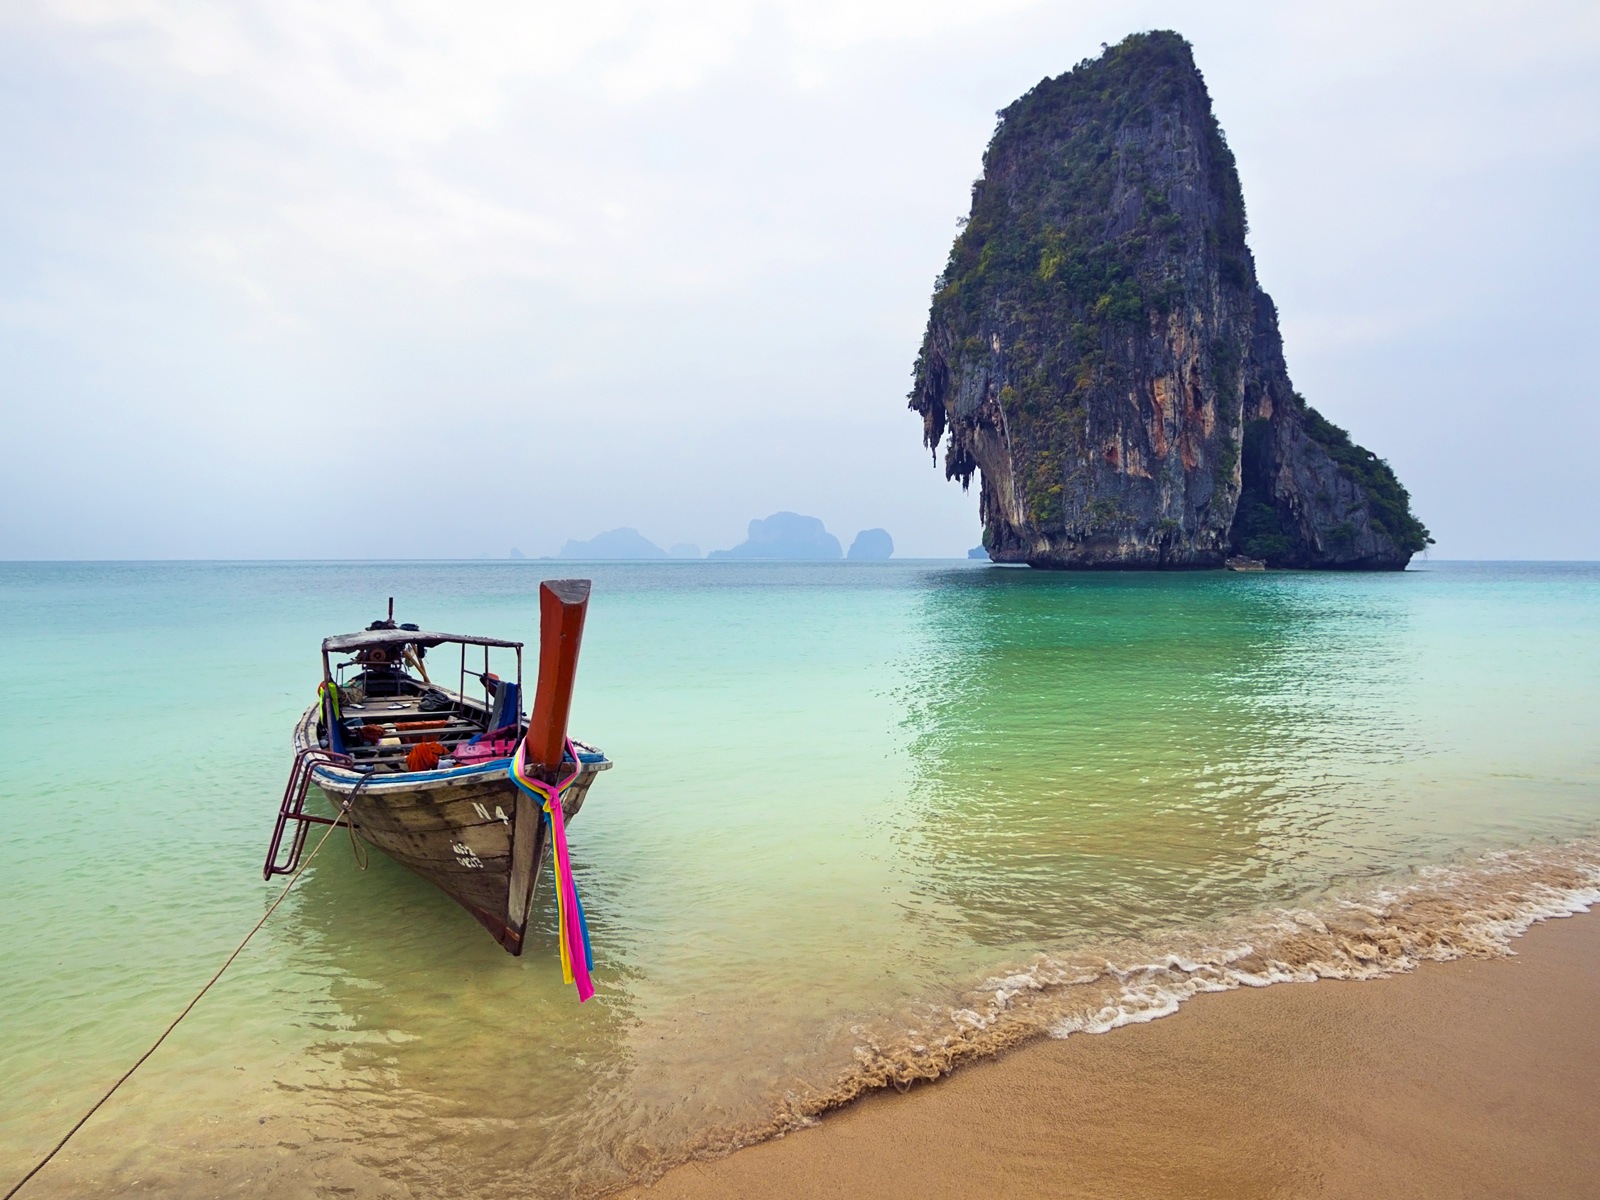 Windows 8 theme wallpaper: beautiful scenery in Thailand #3 - 1600x1200